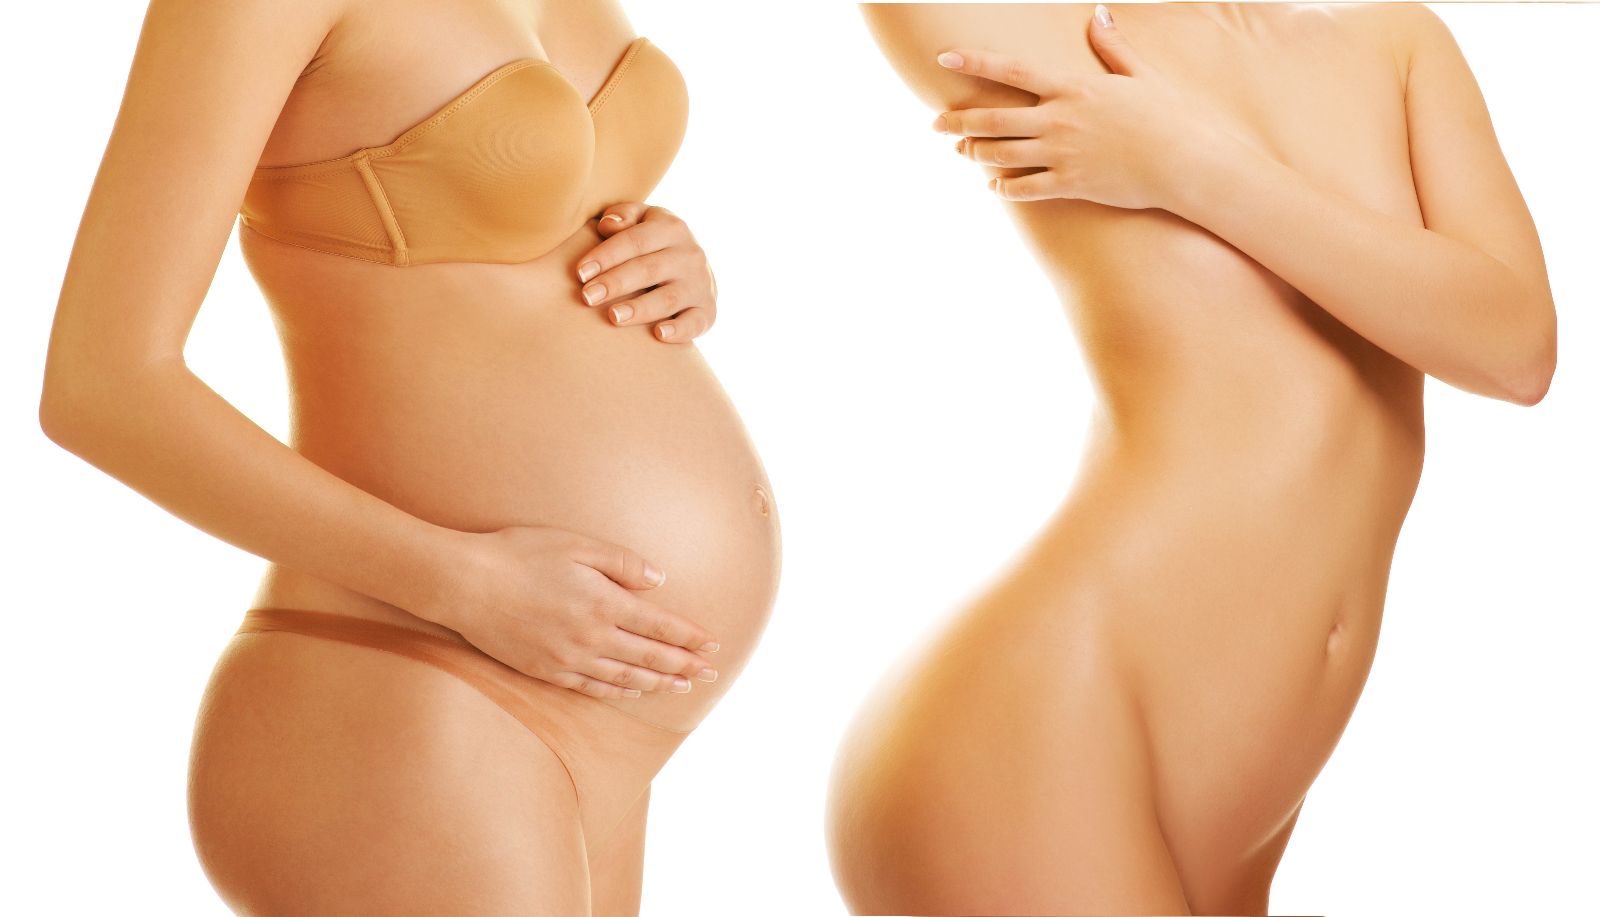 фото груди до беременности и после беременности фото 60